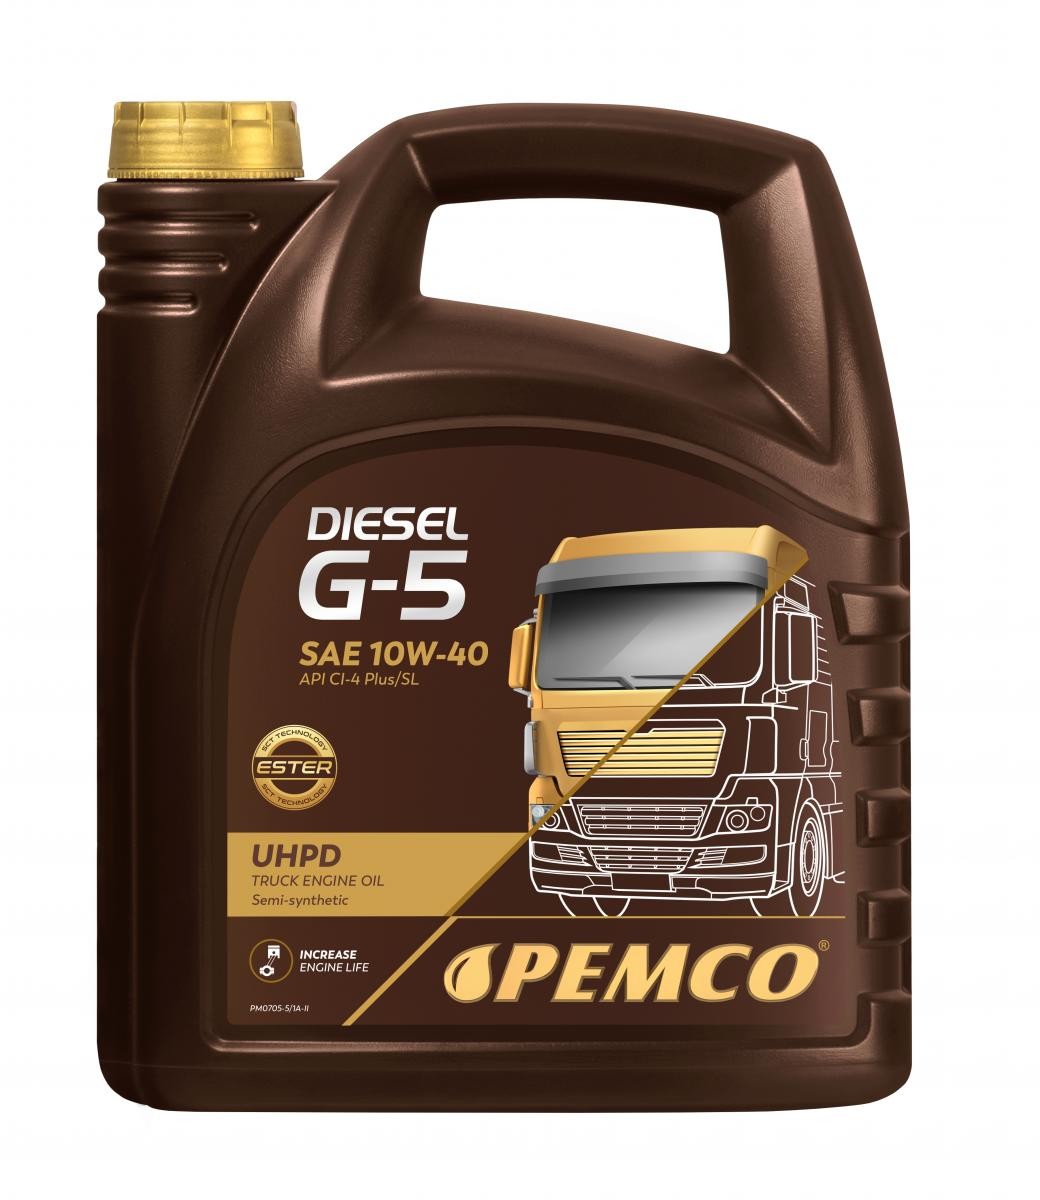 Engine oil API CG-4 PEMCO - PM0705-5 Truck UHPD, DIESEL G-5 UHPD